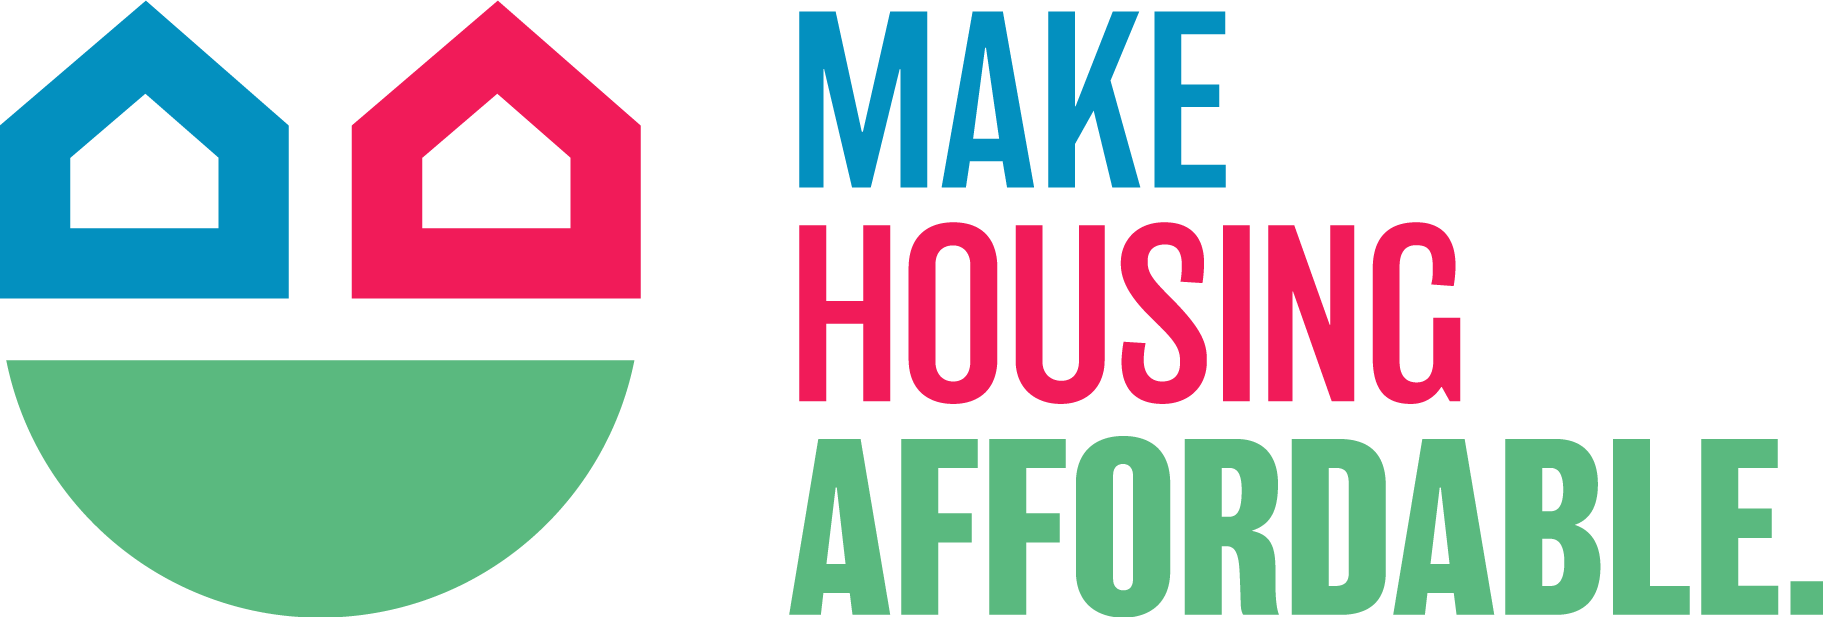 Make Housing Affordable